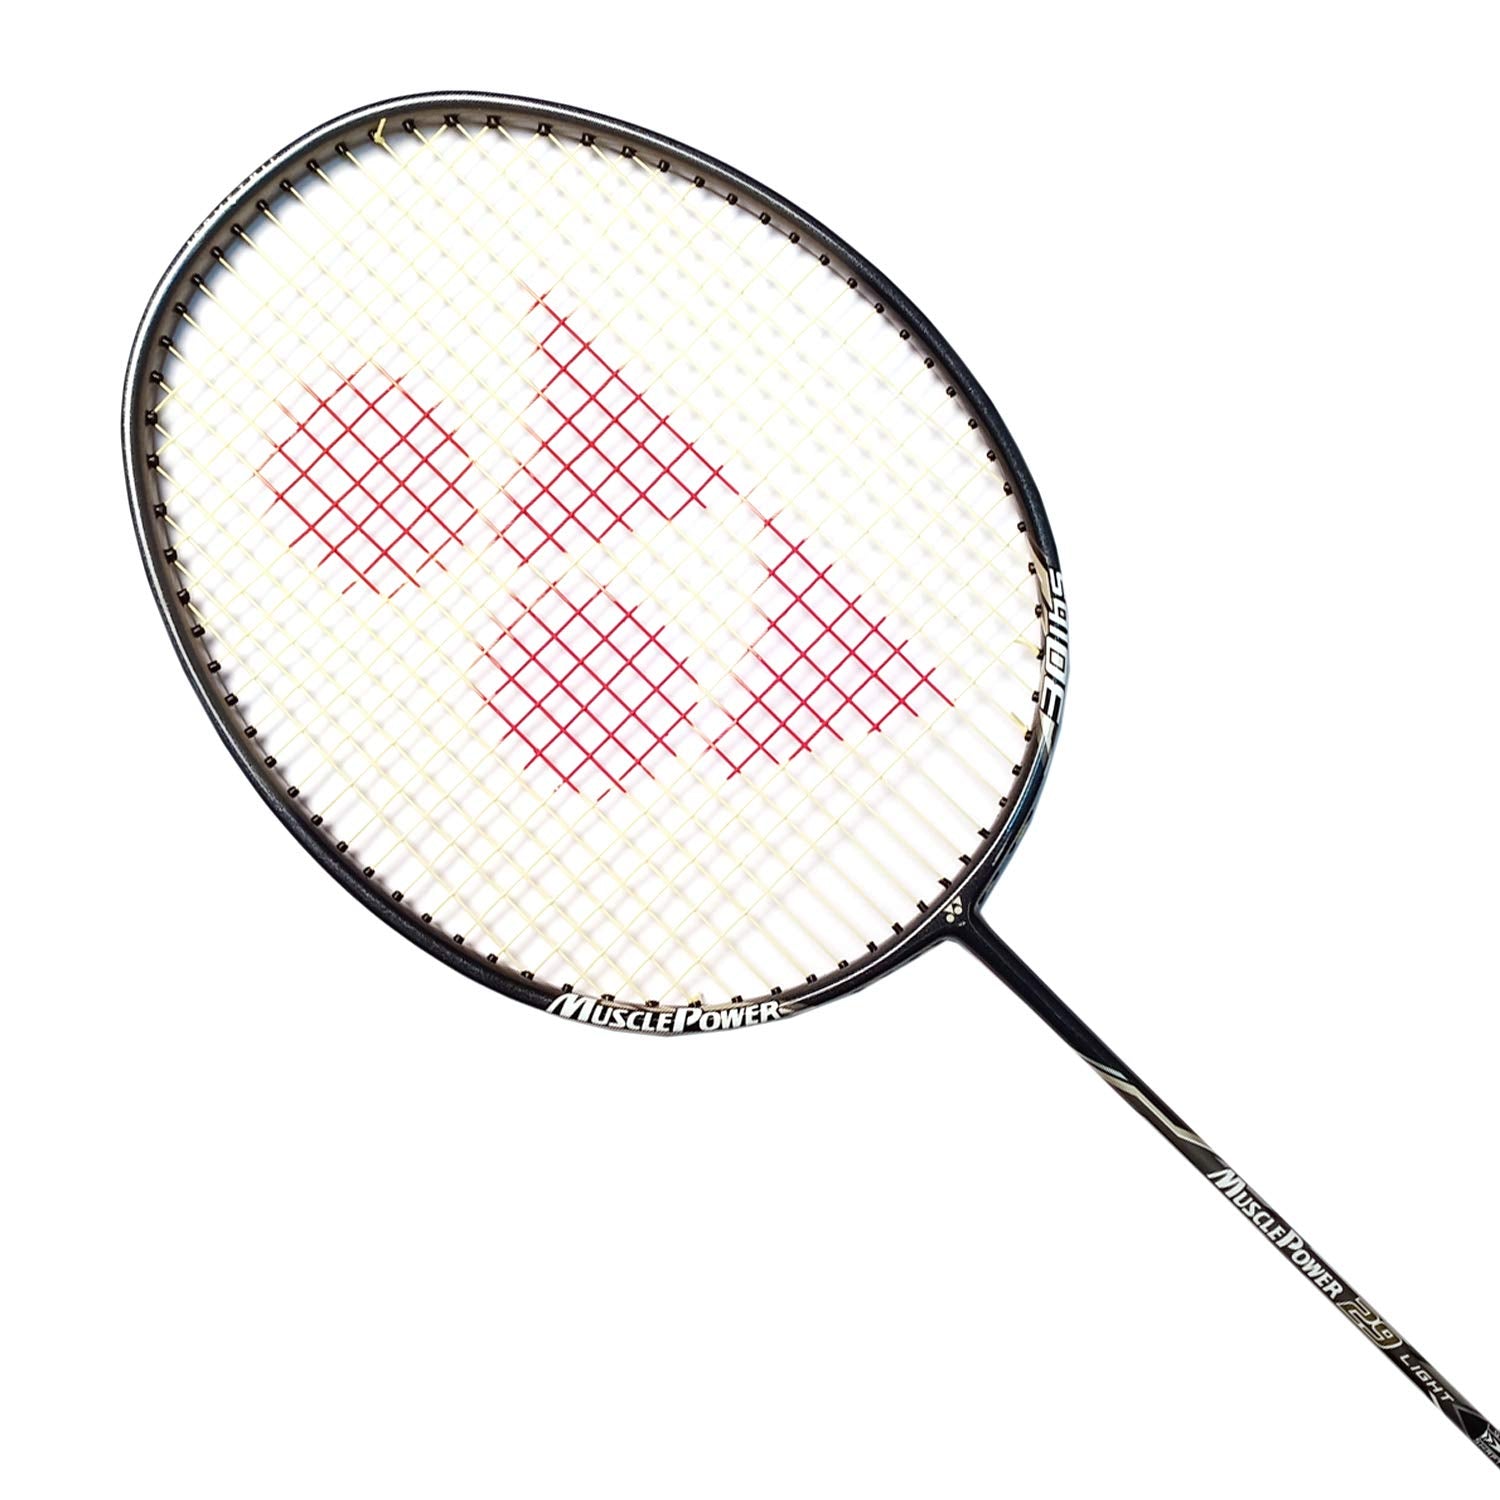 Yonex Muscle Power 29 Light Badminton Racket at Best price Genuine Product Guarantee